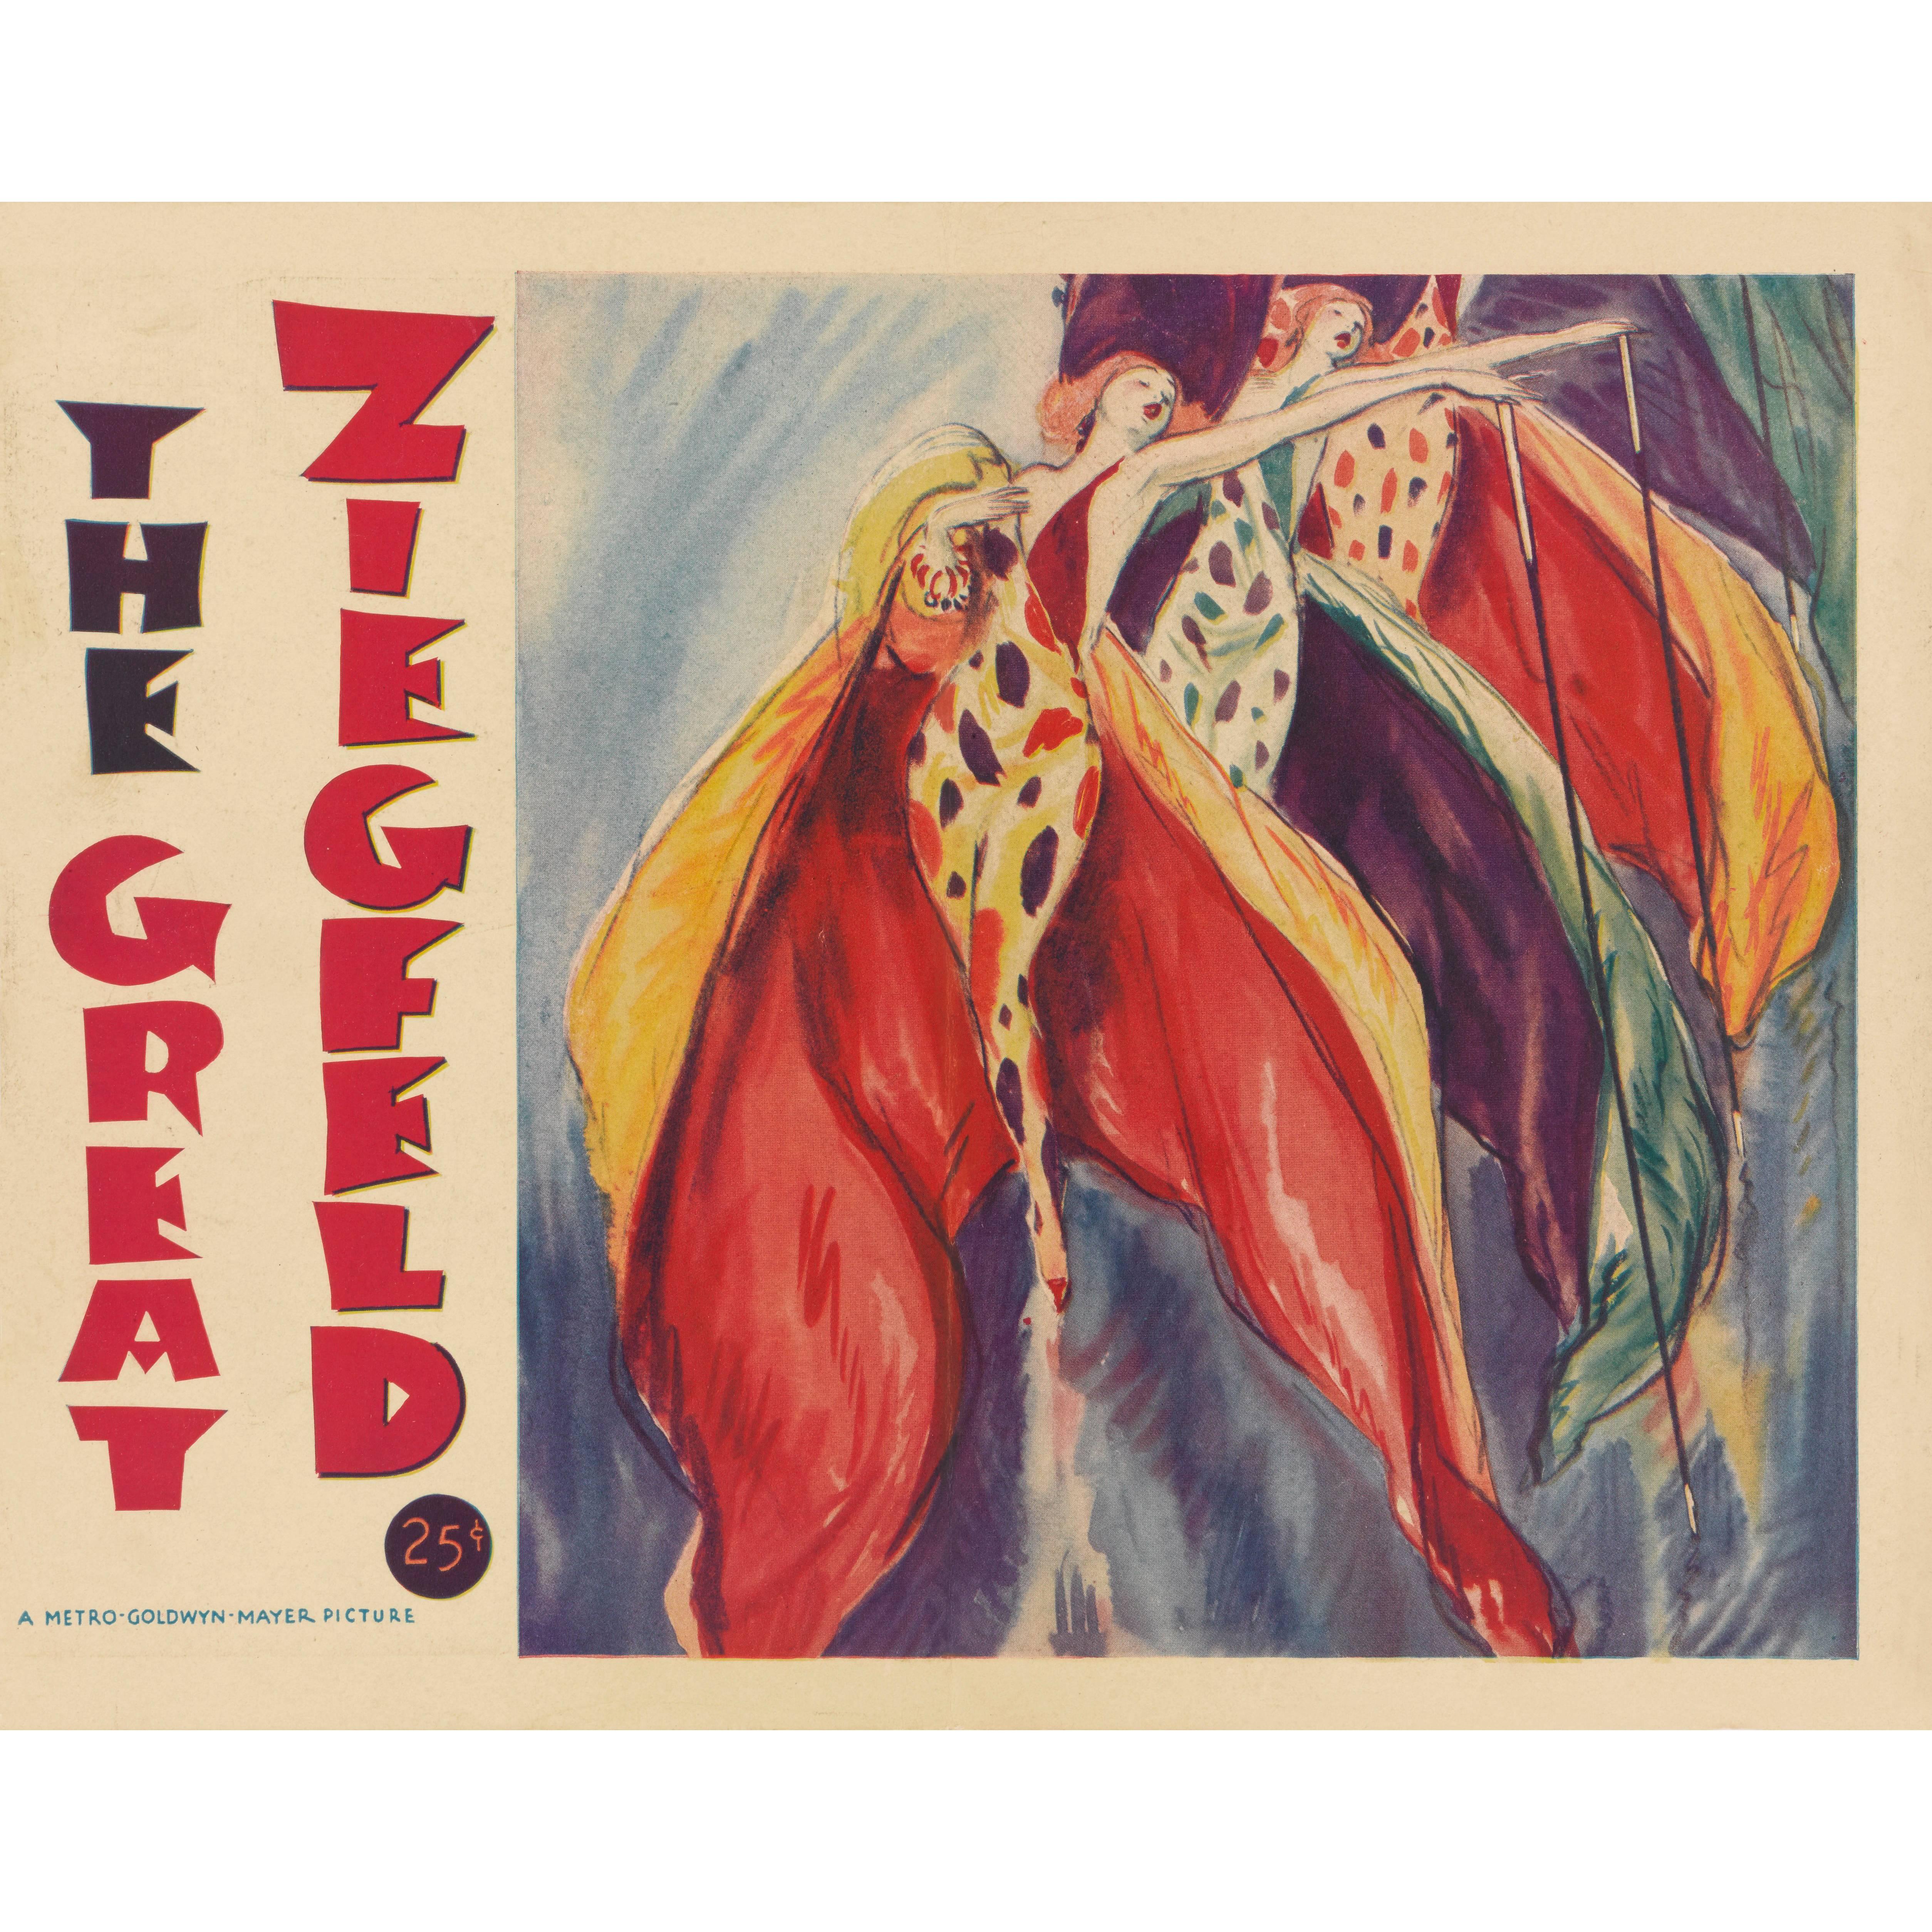 "The Great Ziegfeld" Original US Program Cover